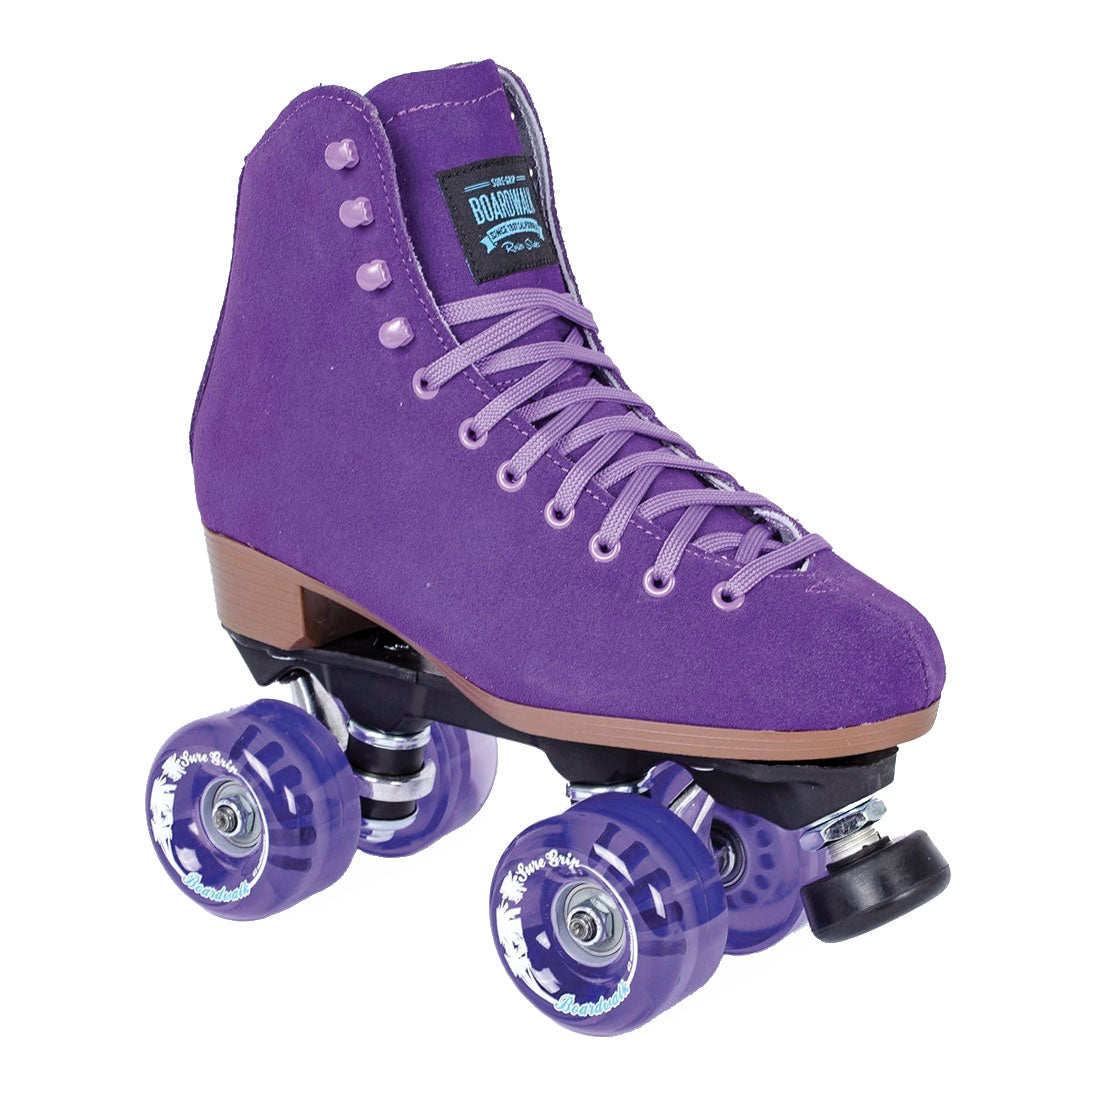 Sure-Grip Boardwalk Skate - Jasmine Purple Roller Skates